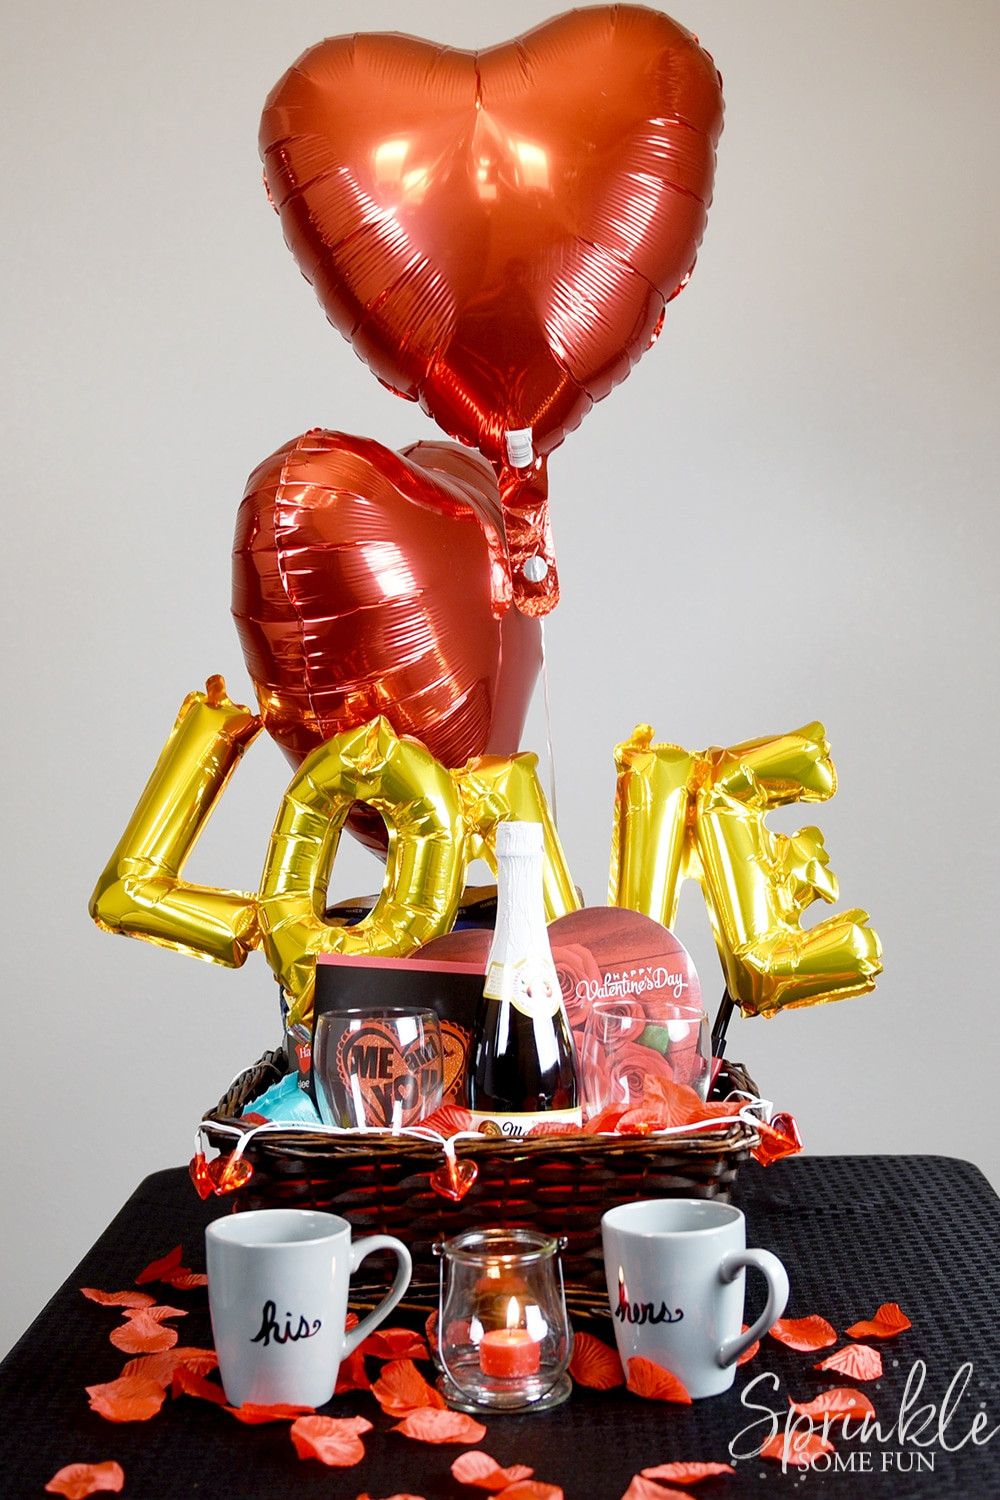 Be My Valentine Gift Ideas
 Romantic Valentine Gift Basket Ideas ⋆ Sprinkle Some Fun